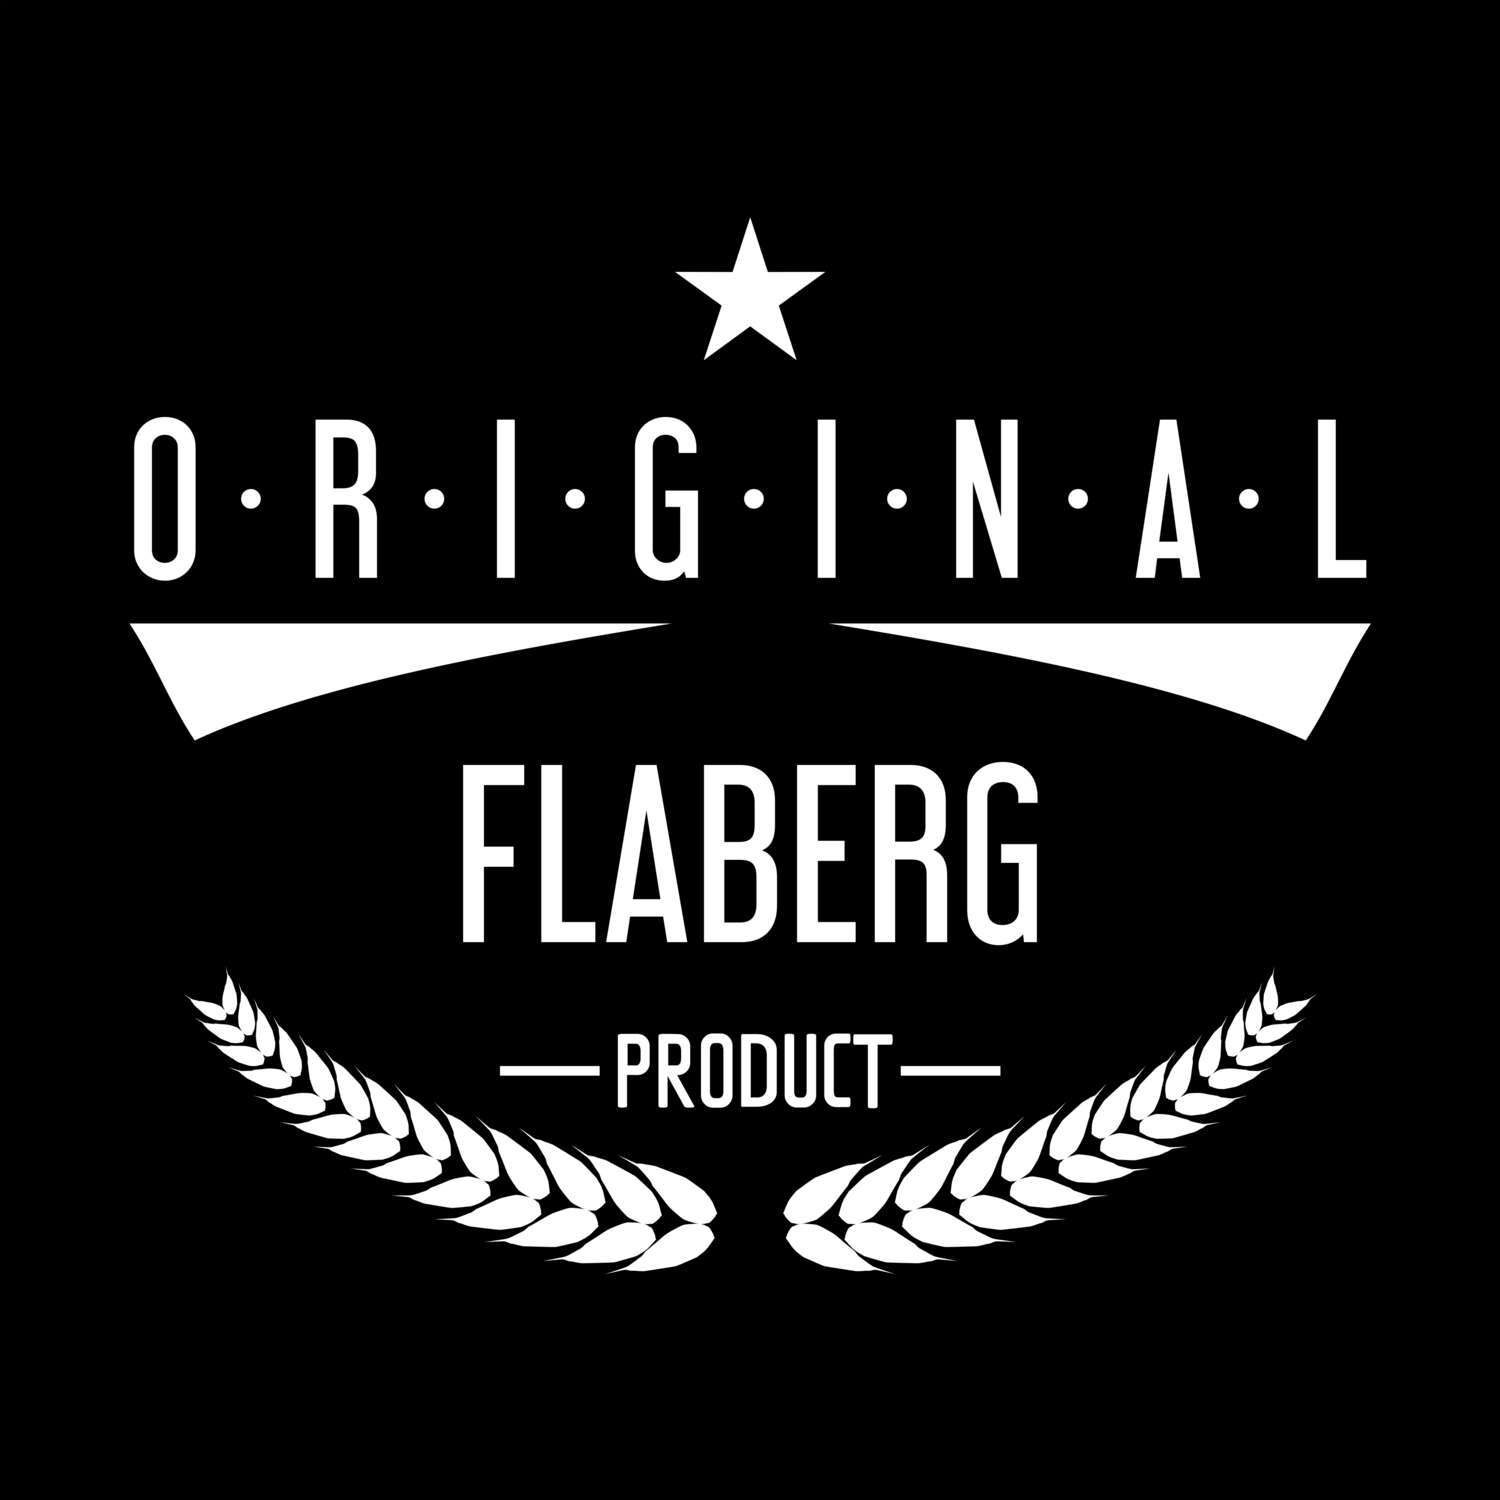 Flaberg T-Shirt »Original Product«